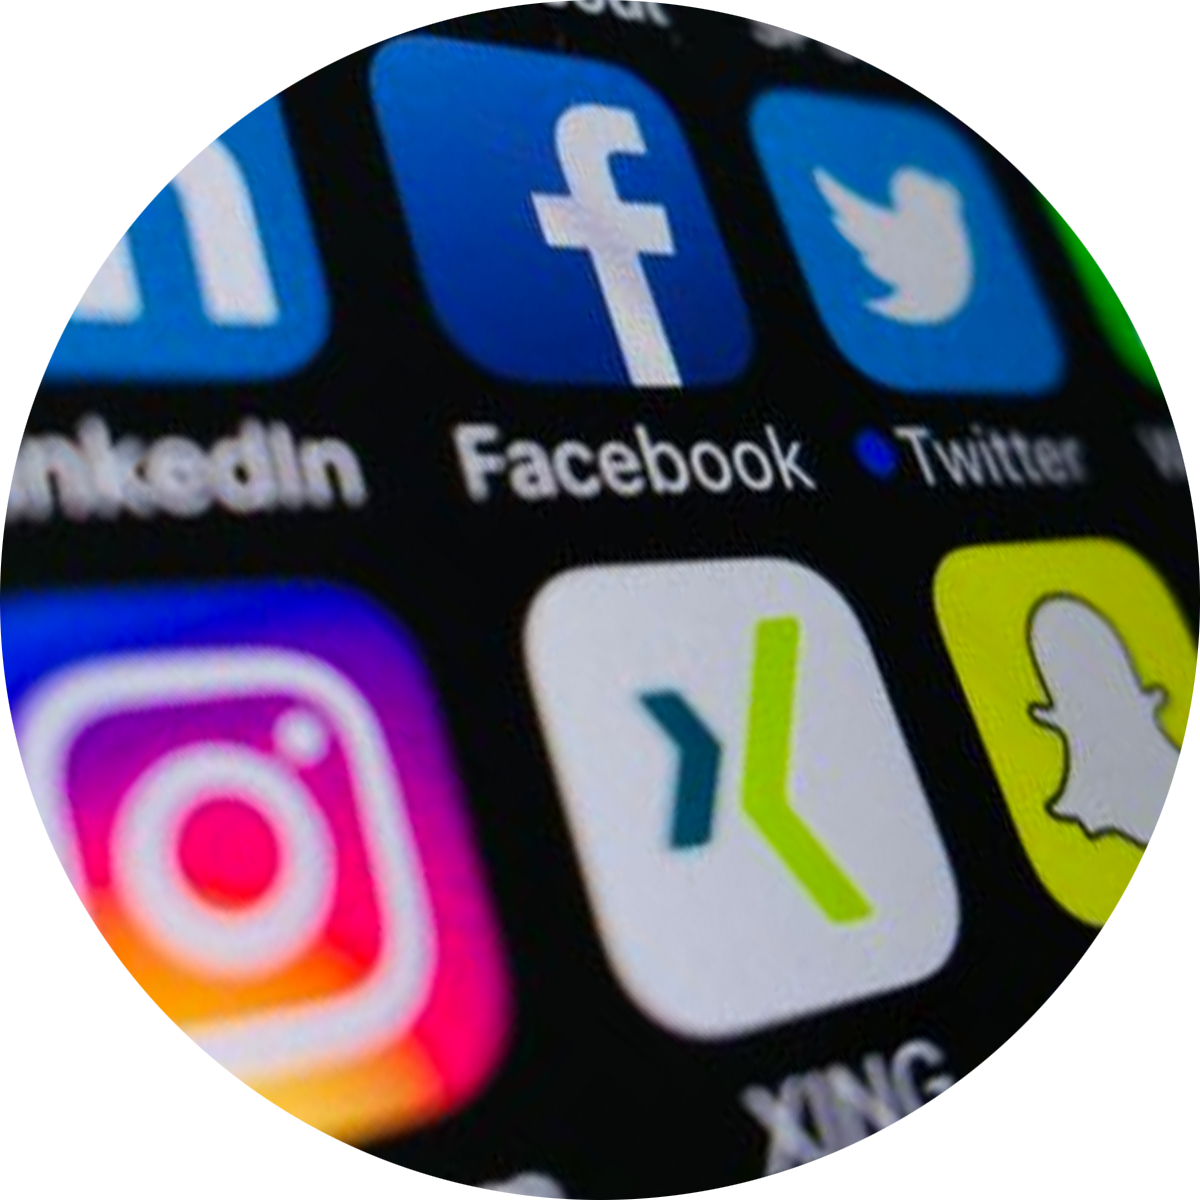 Ausschnitt von den Social Media Platformen LinkedIn, Facebook, Twitter, Instagram, XING und Snapchat